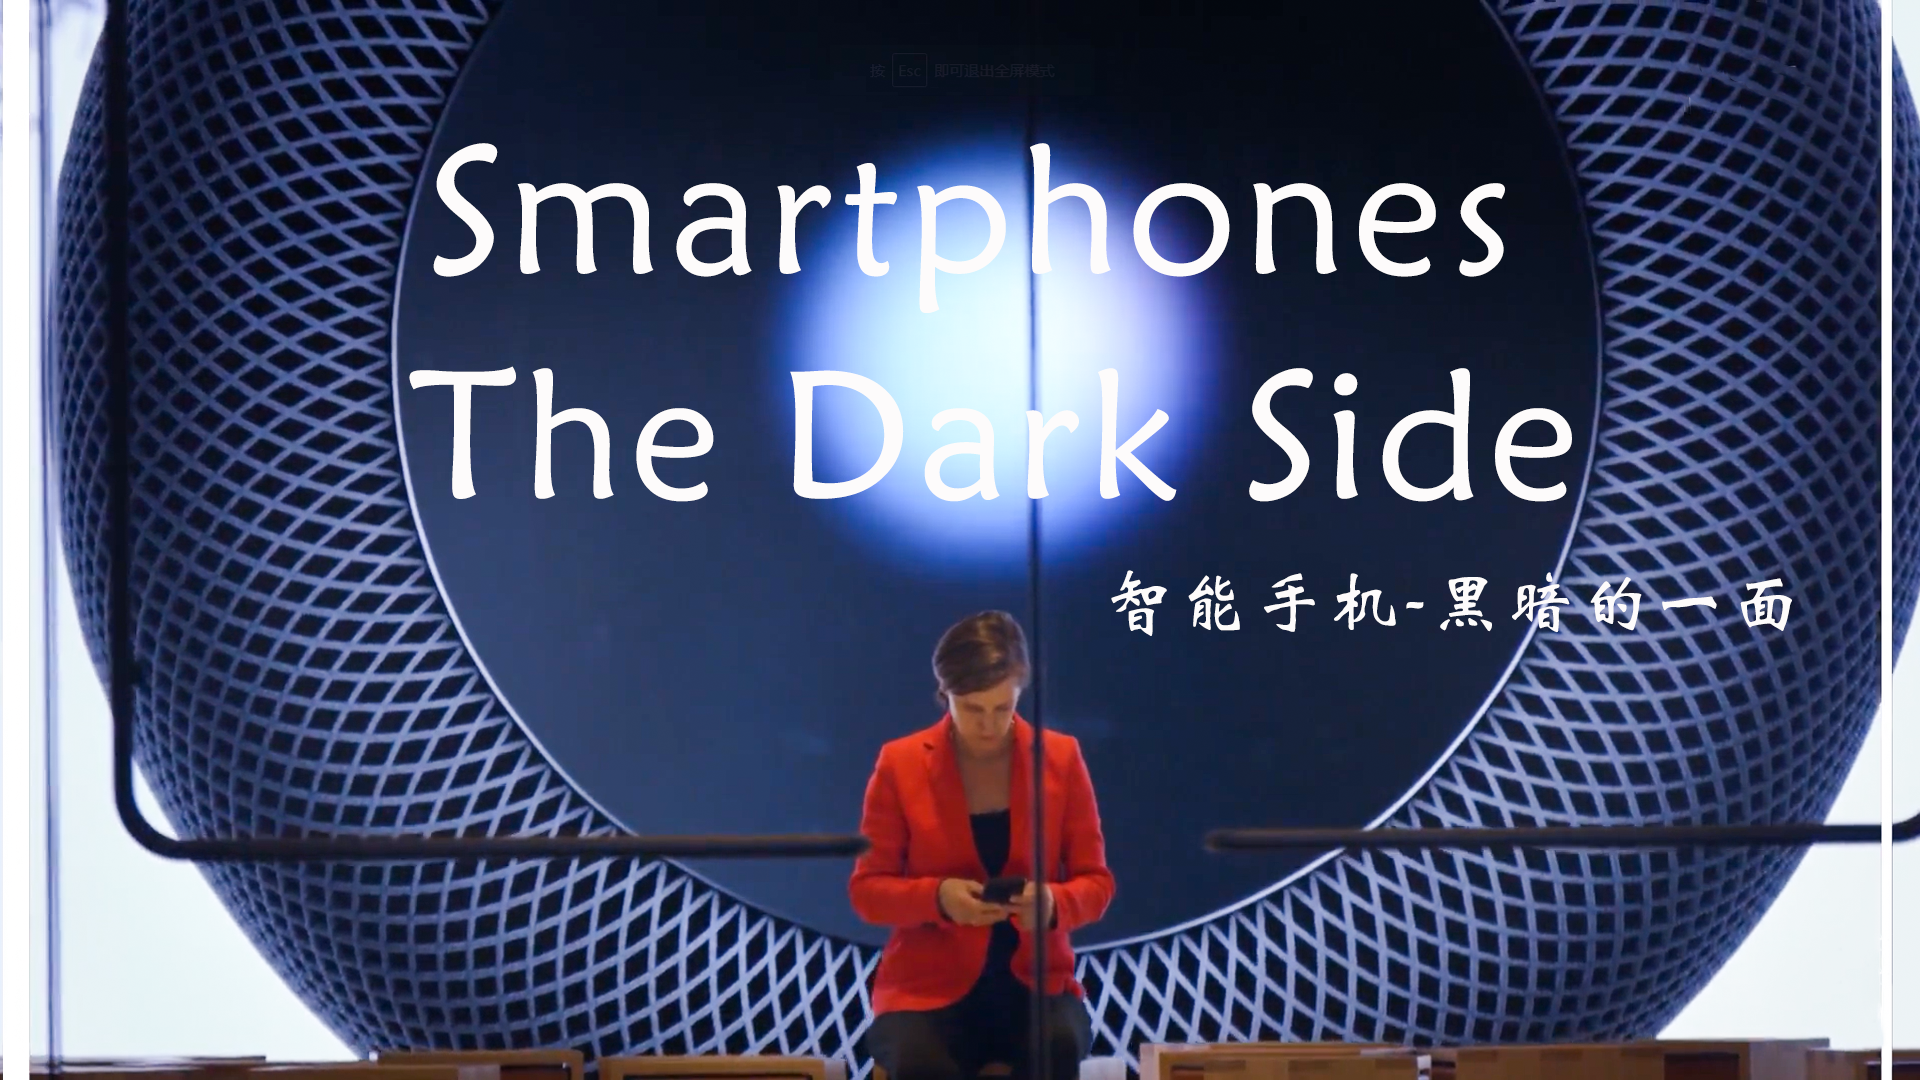 【纪录片】智能手机-黑暗的一面-Panorama: Smartphones - The Dark Side